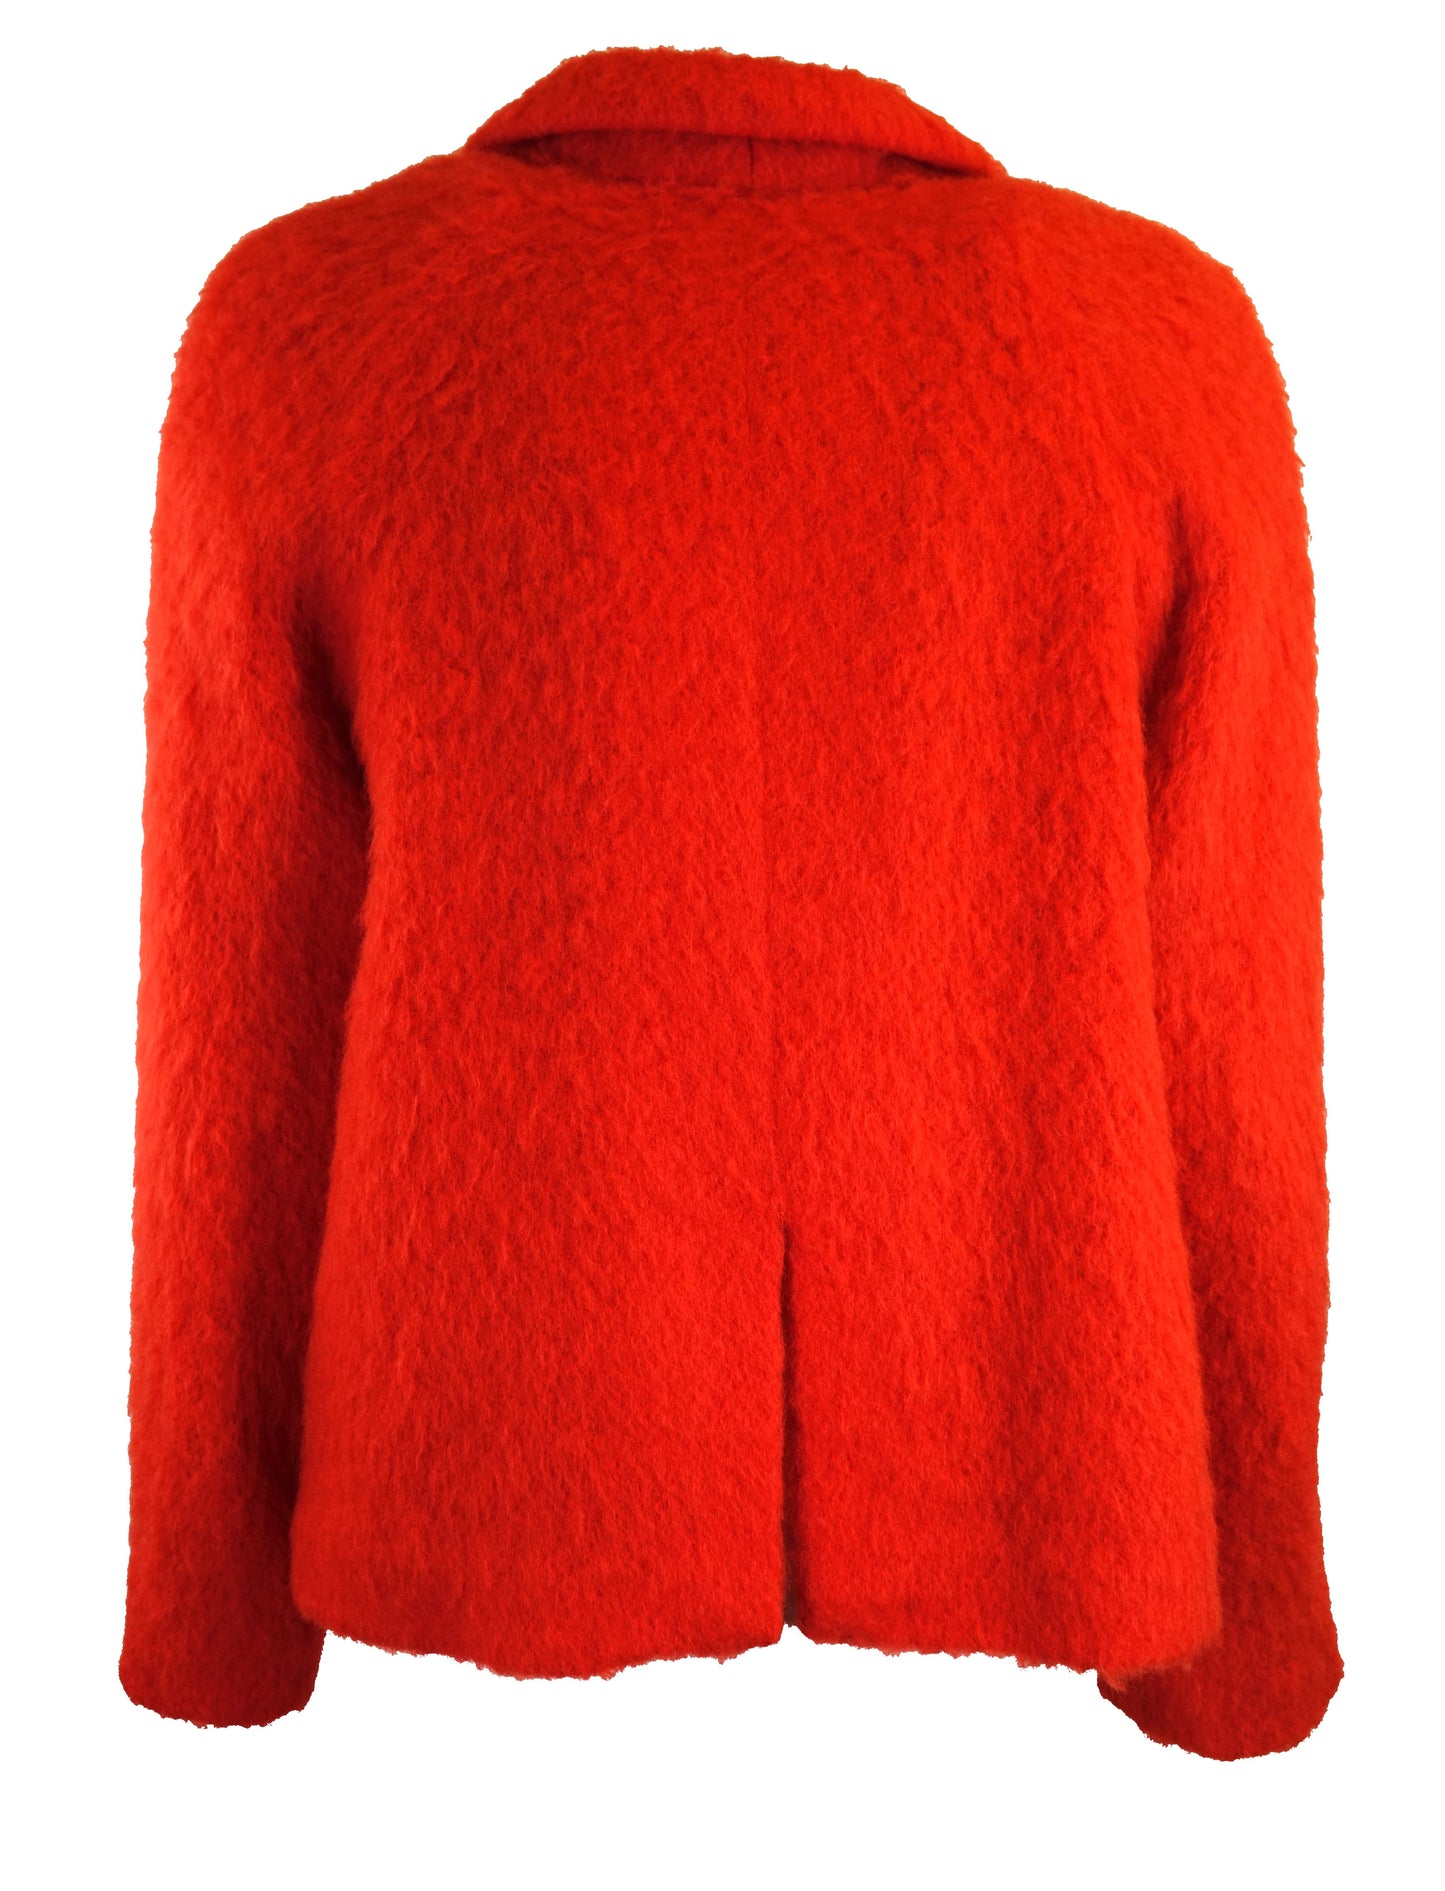 Brest jacket in strong orange wool/mohair